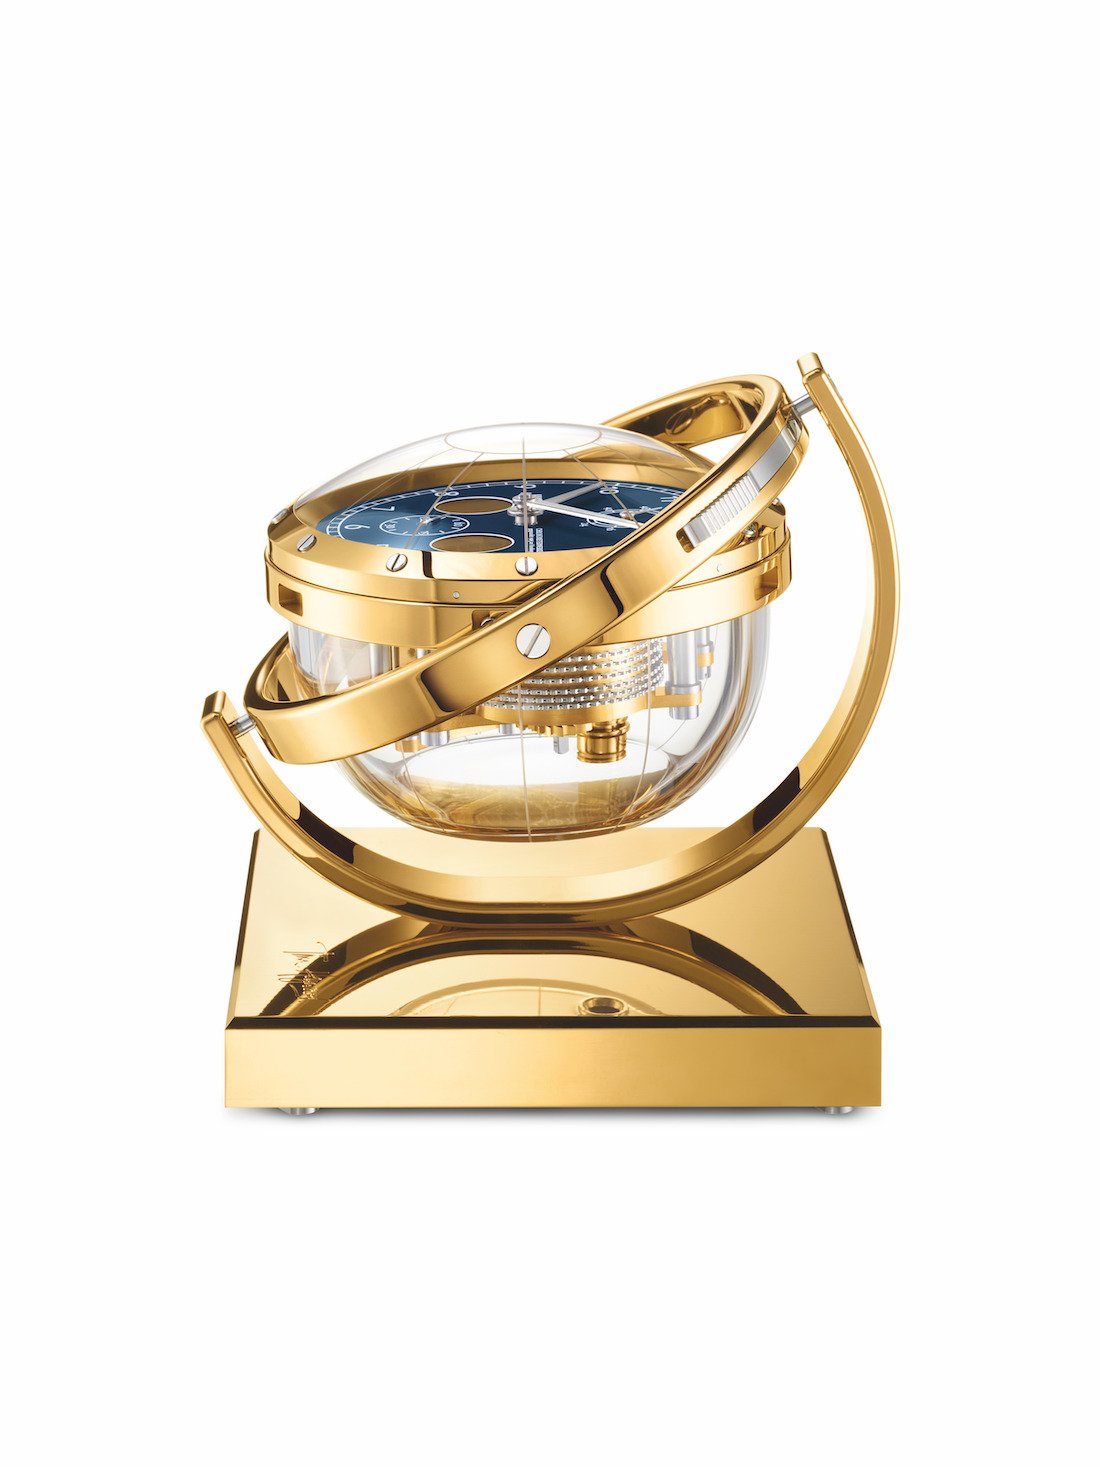 Wempe Marine Chronometer by Tim Heywood_CW800018_CW800019_PR-3.jpg